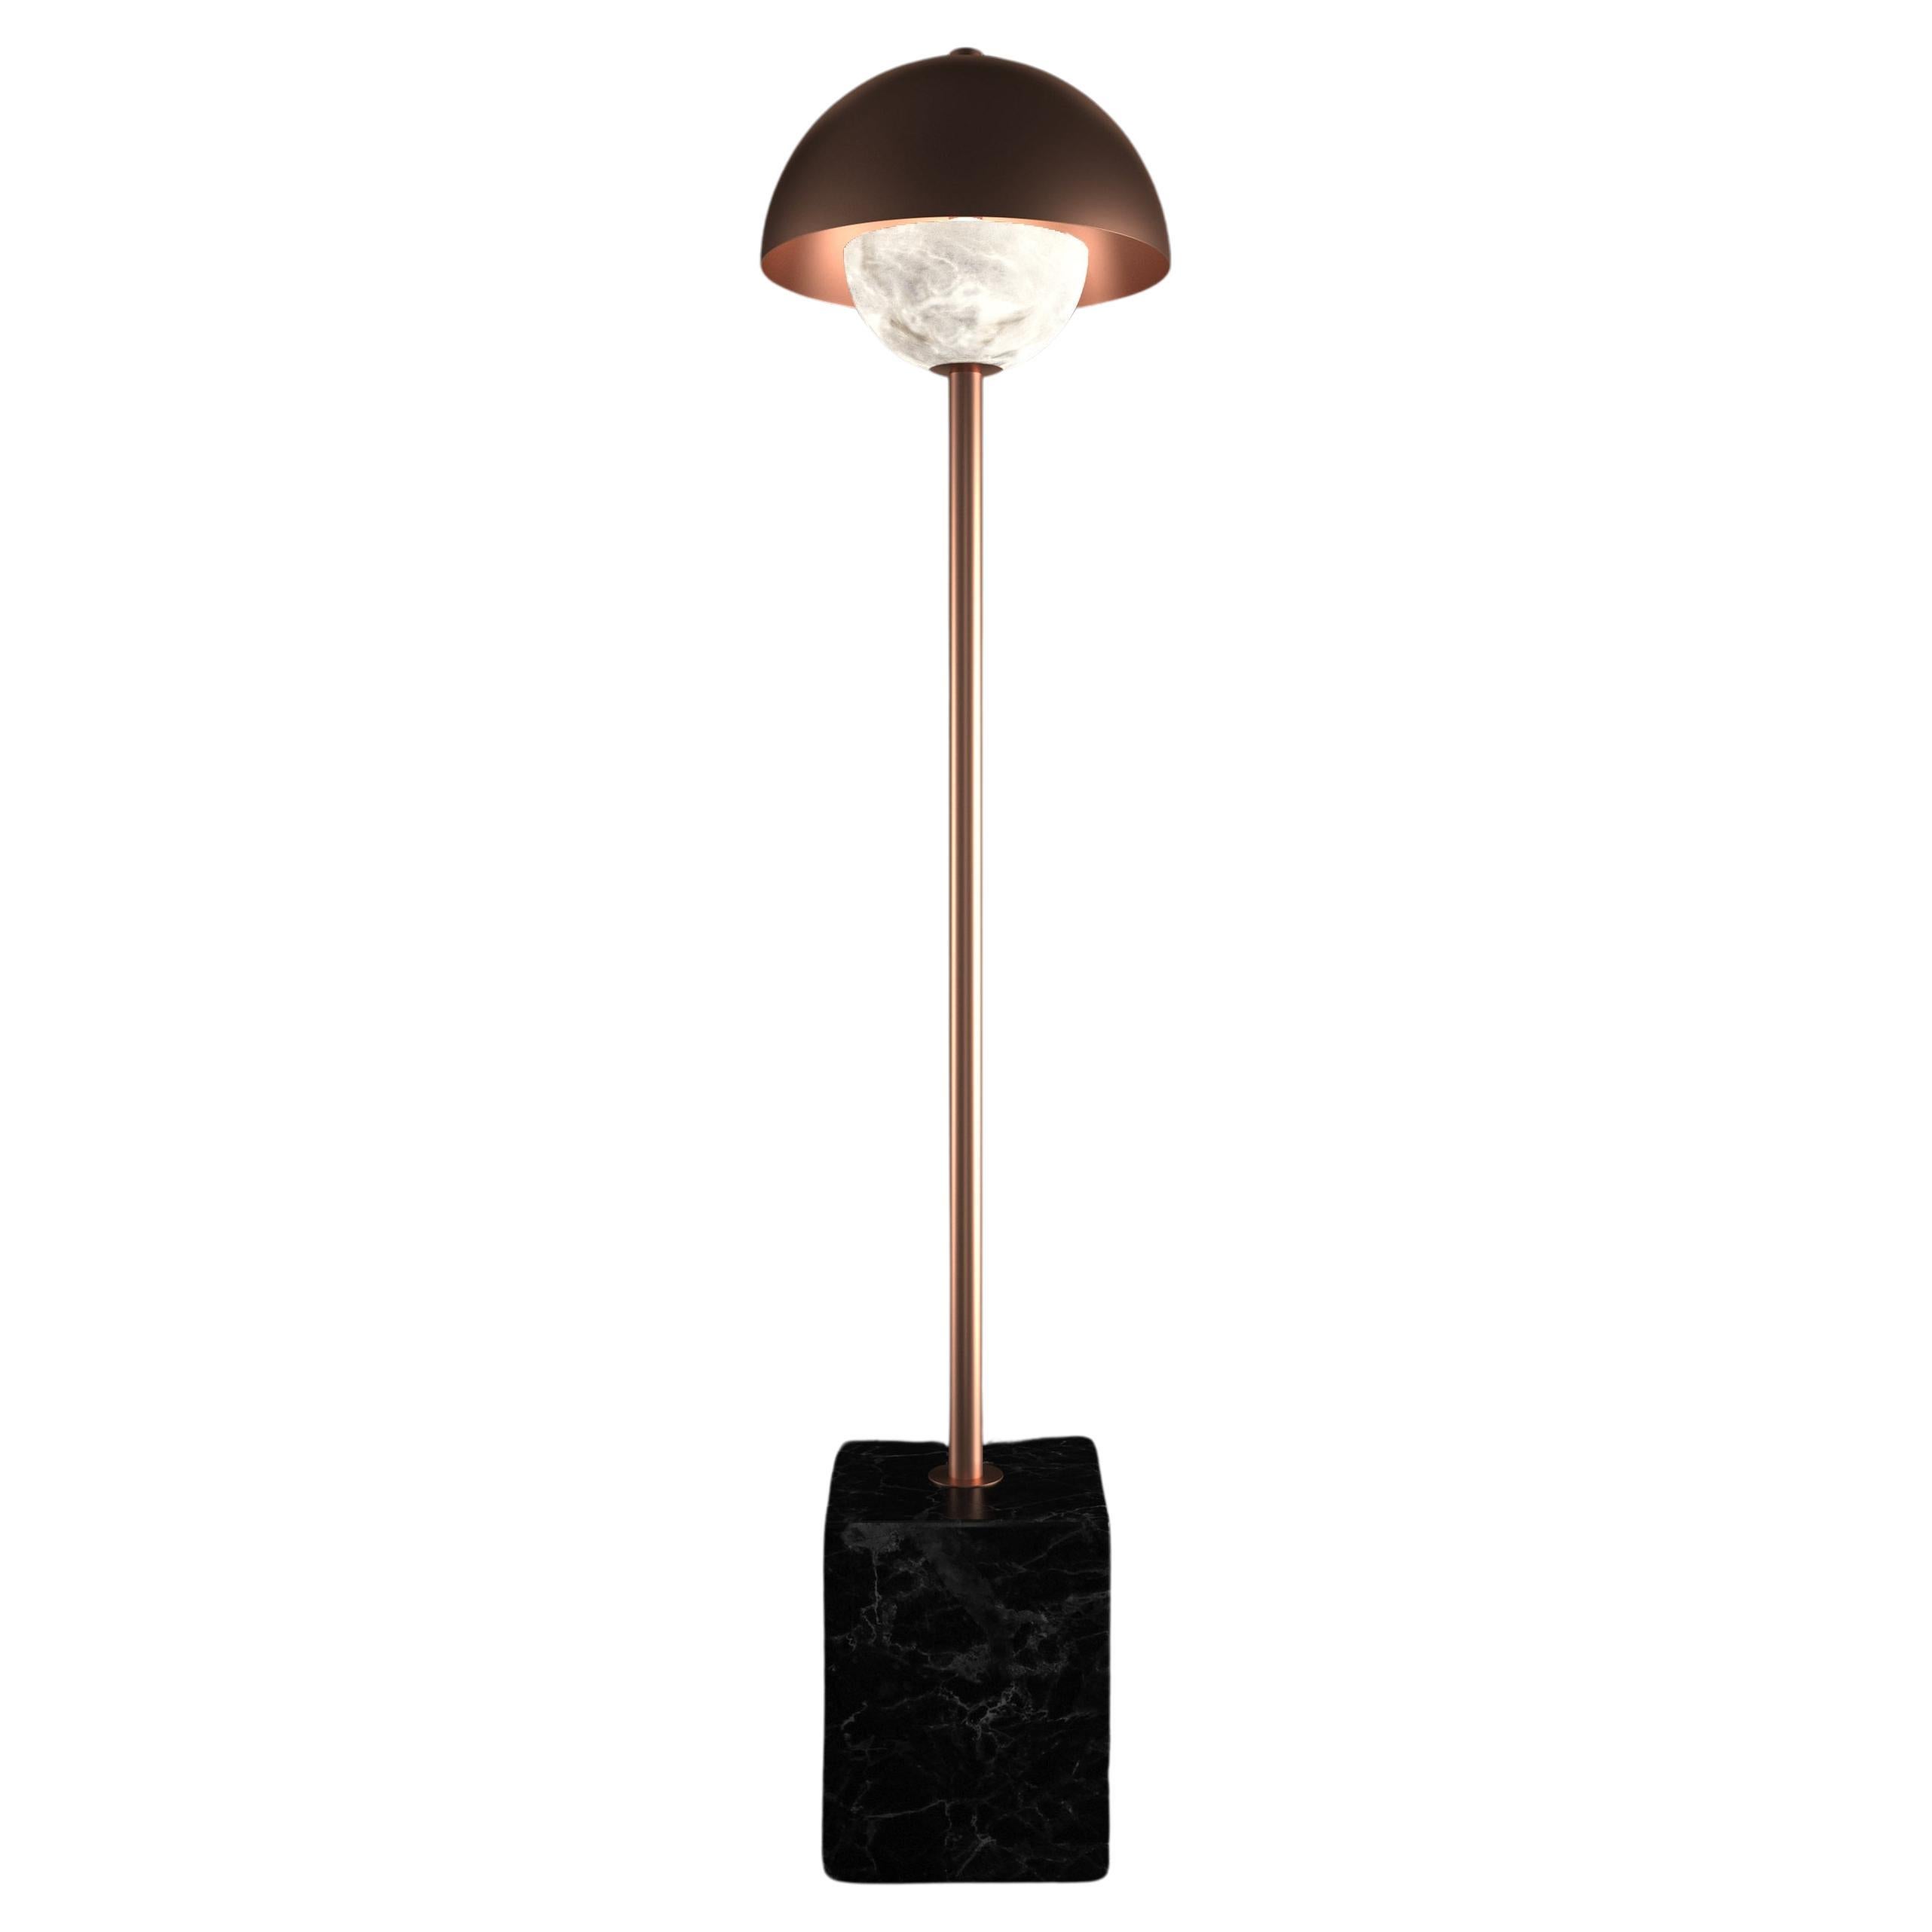 Apollo Copper Floor Lamp by Alabastro Italiano